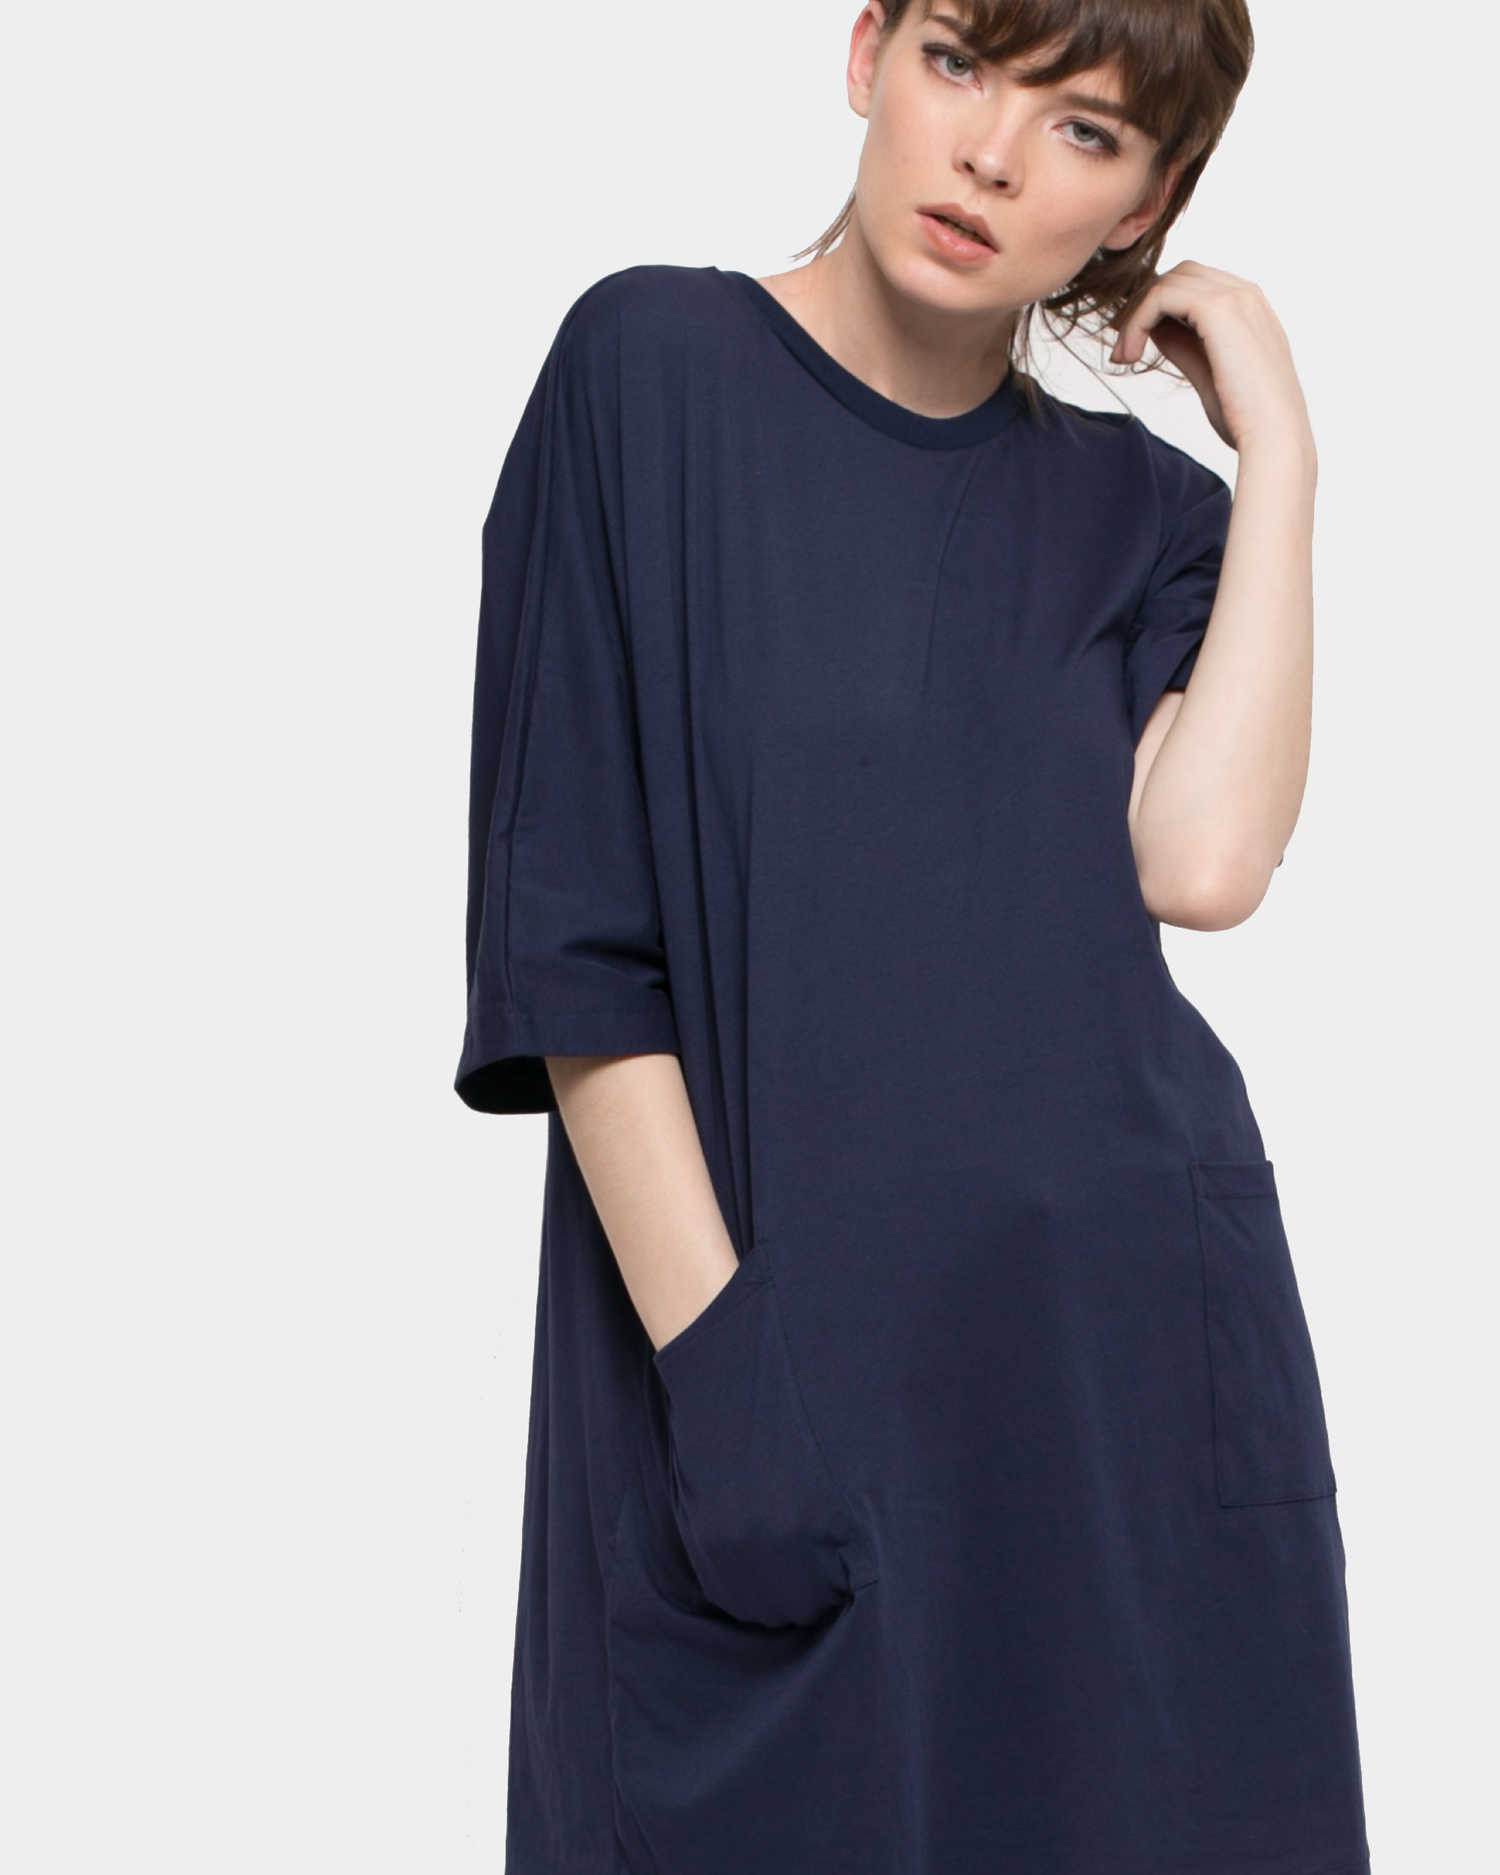 Product Women - Mini Dresses - Plain Pocket Dress Navy Blue | Monstore